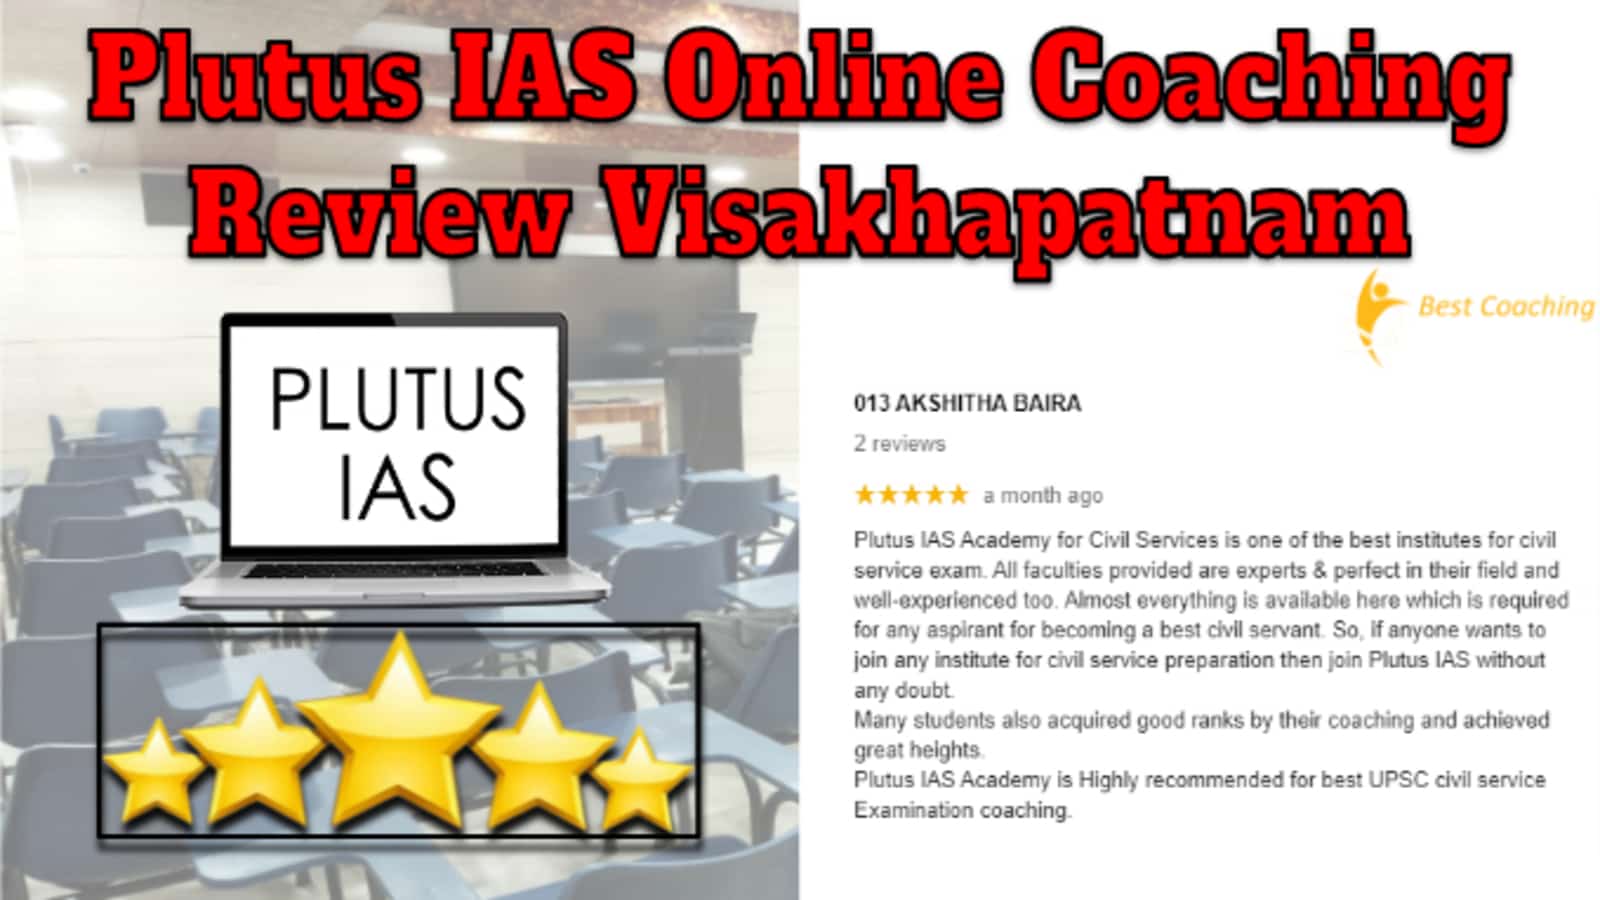 Plutus IAS Online Coaching Review Visakhapatnam